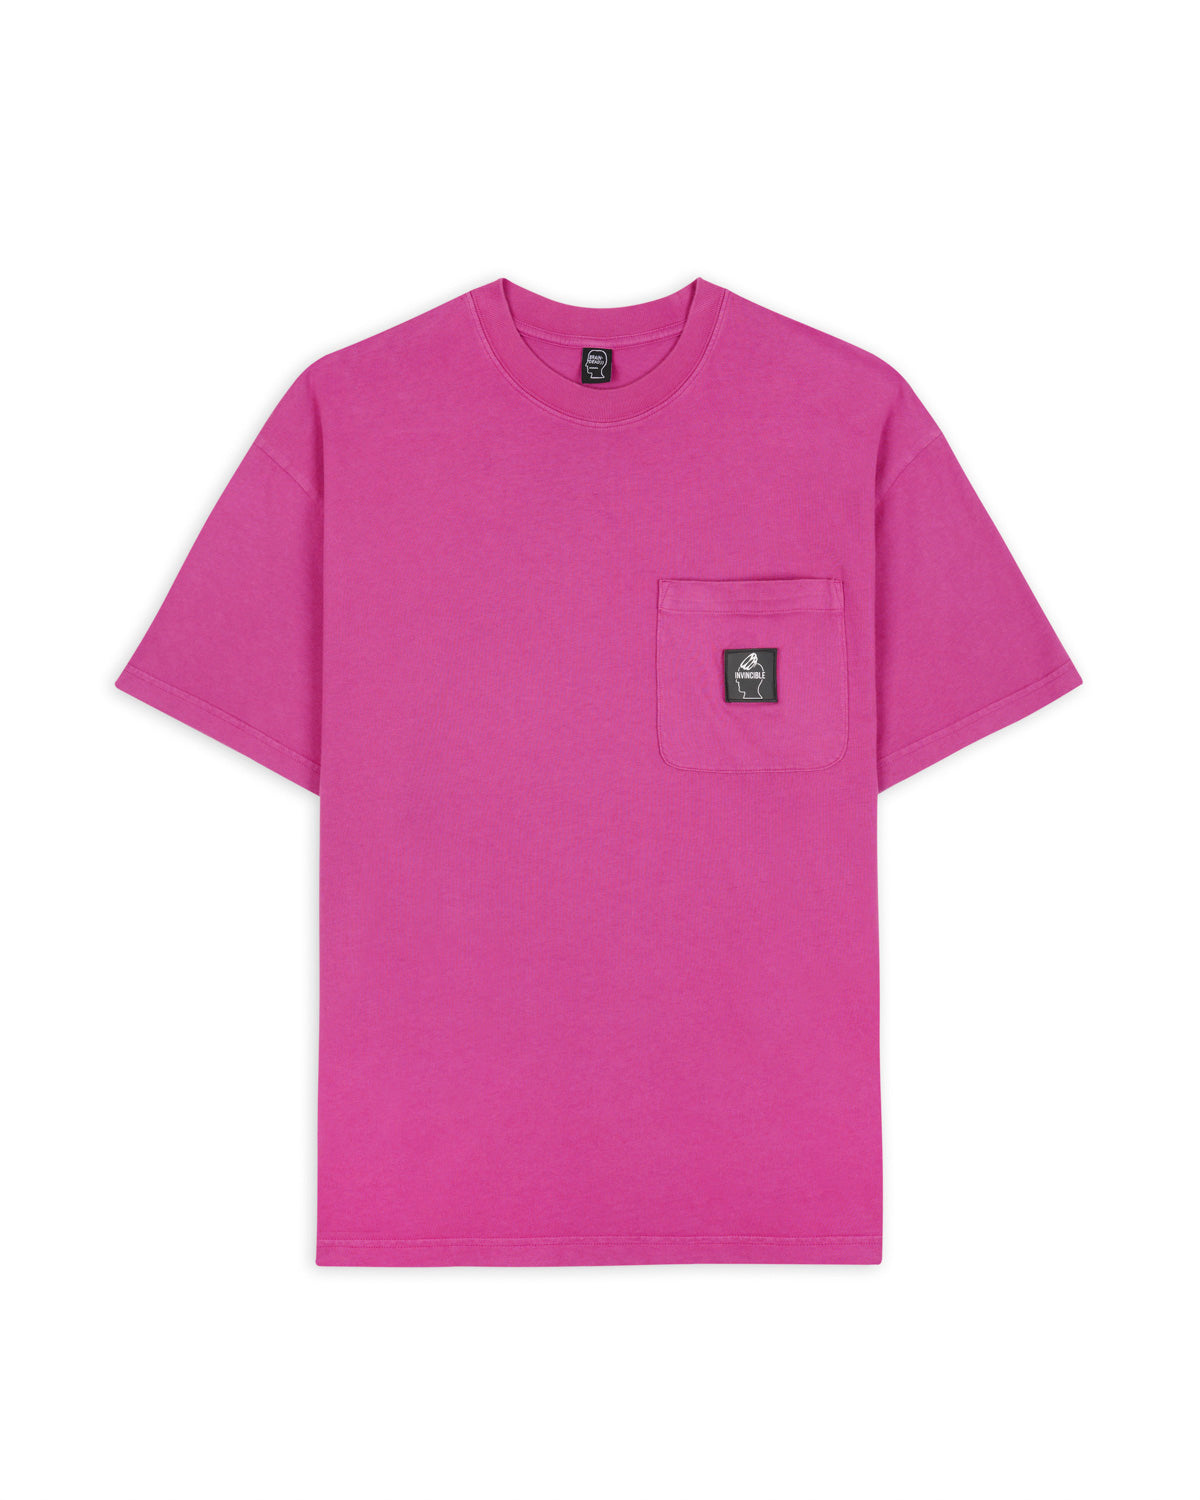 Brain Dead x Invincible Equipment T-Shirt - Pink 1